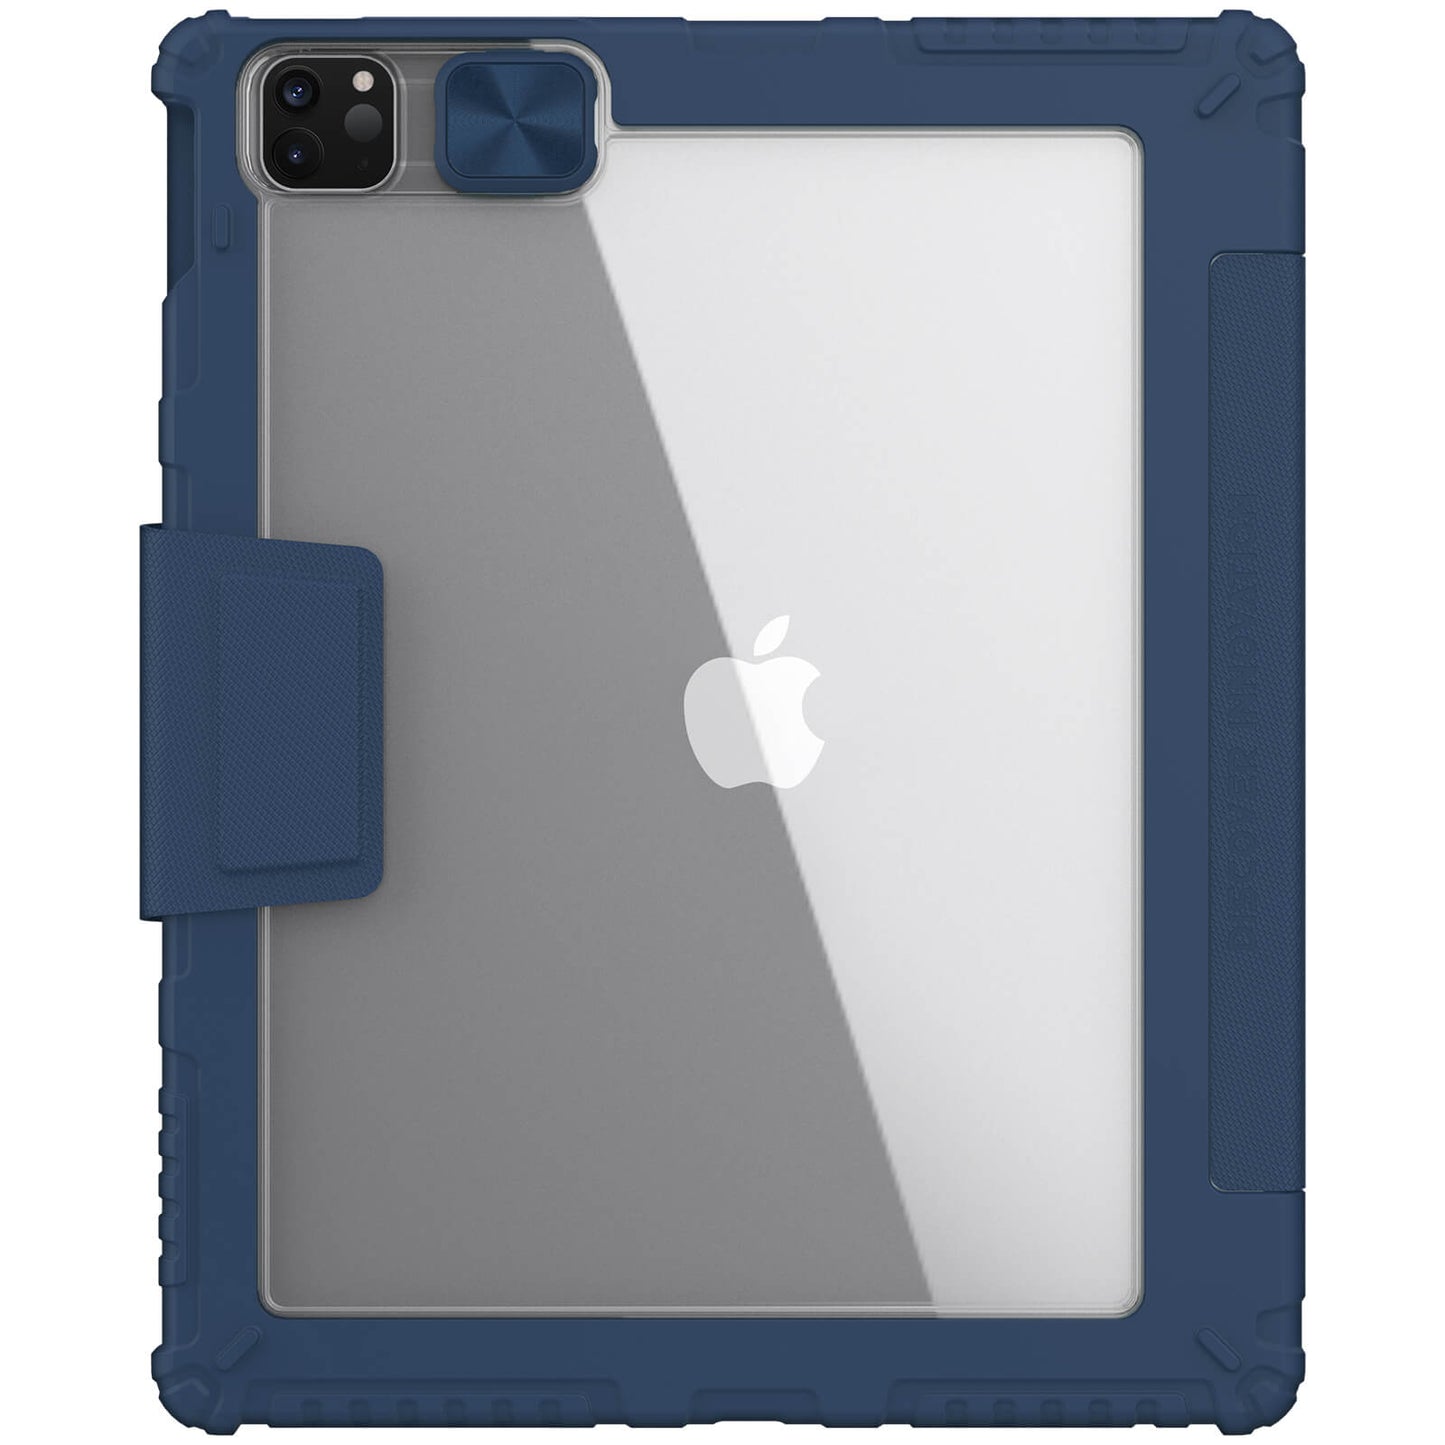 Fierce Armor rugged case for iPad Pro 11”/12.9" 2021 2020_back side_navy blue